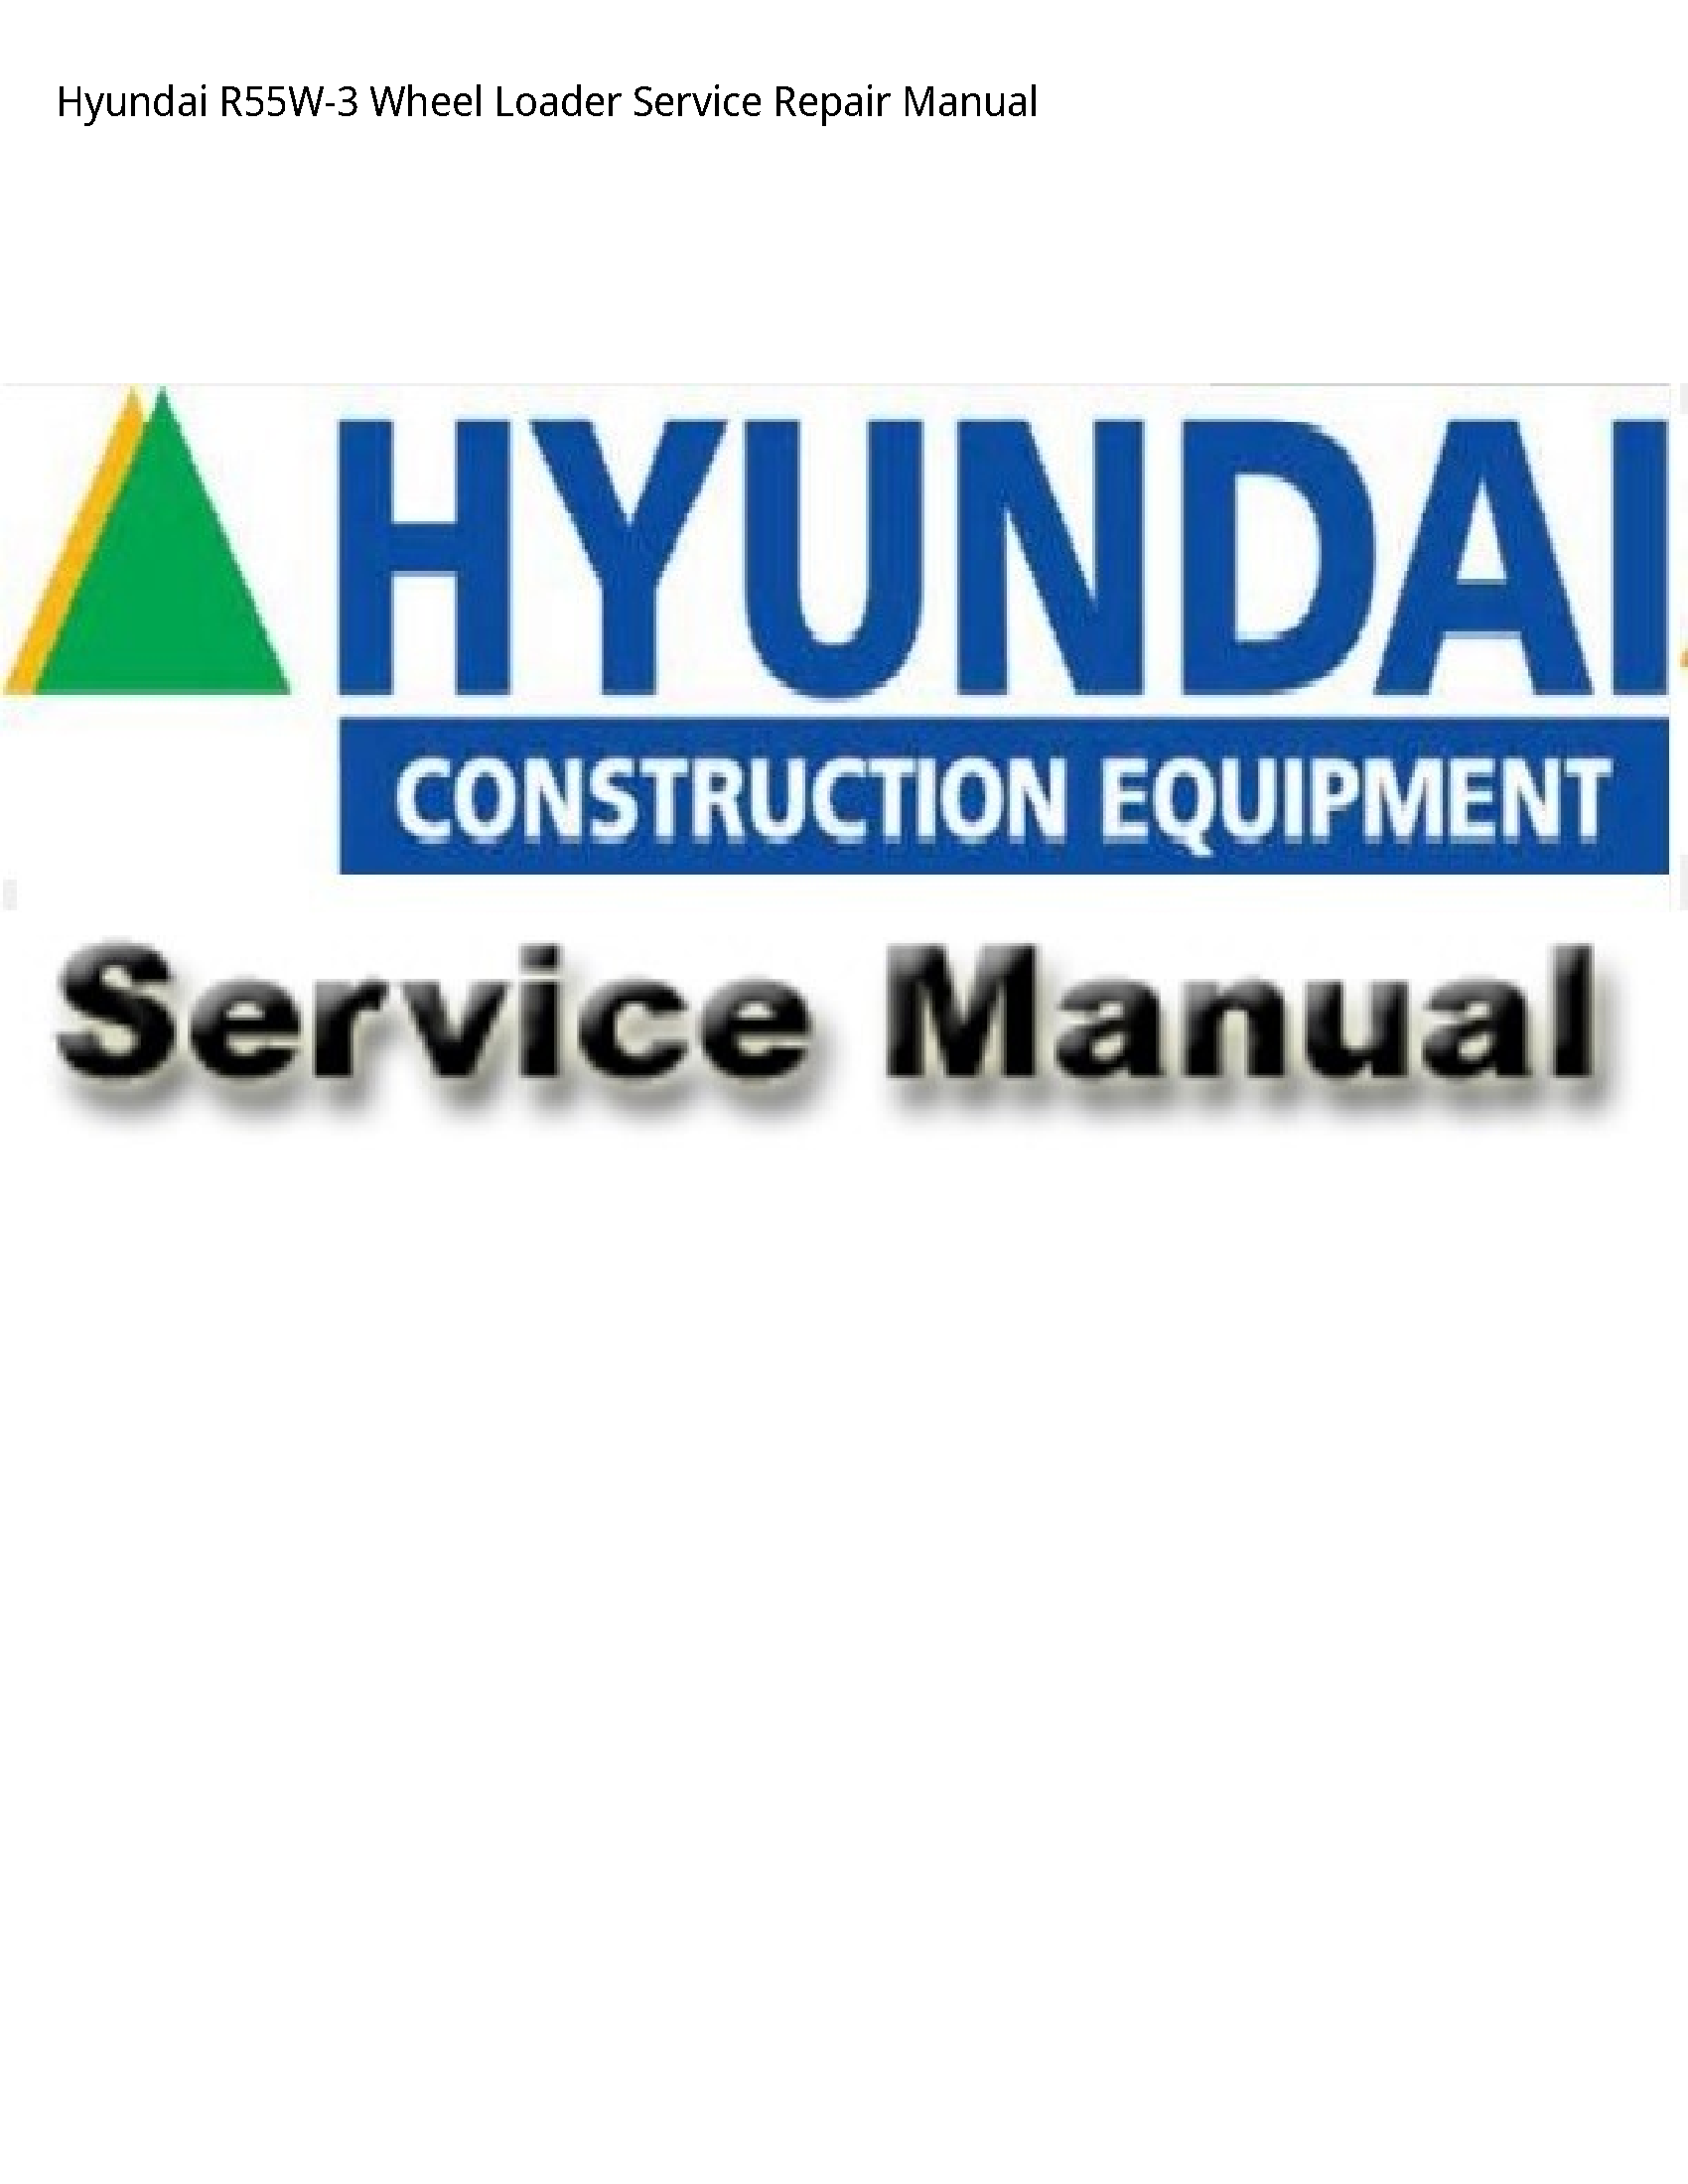 Hyundai R55W-3 Wheel Loader manual